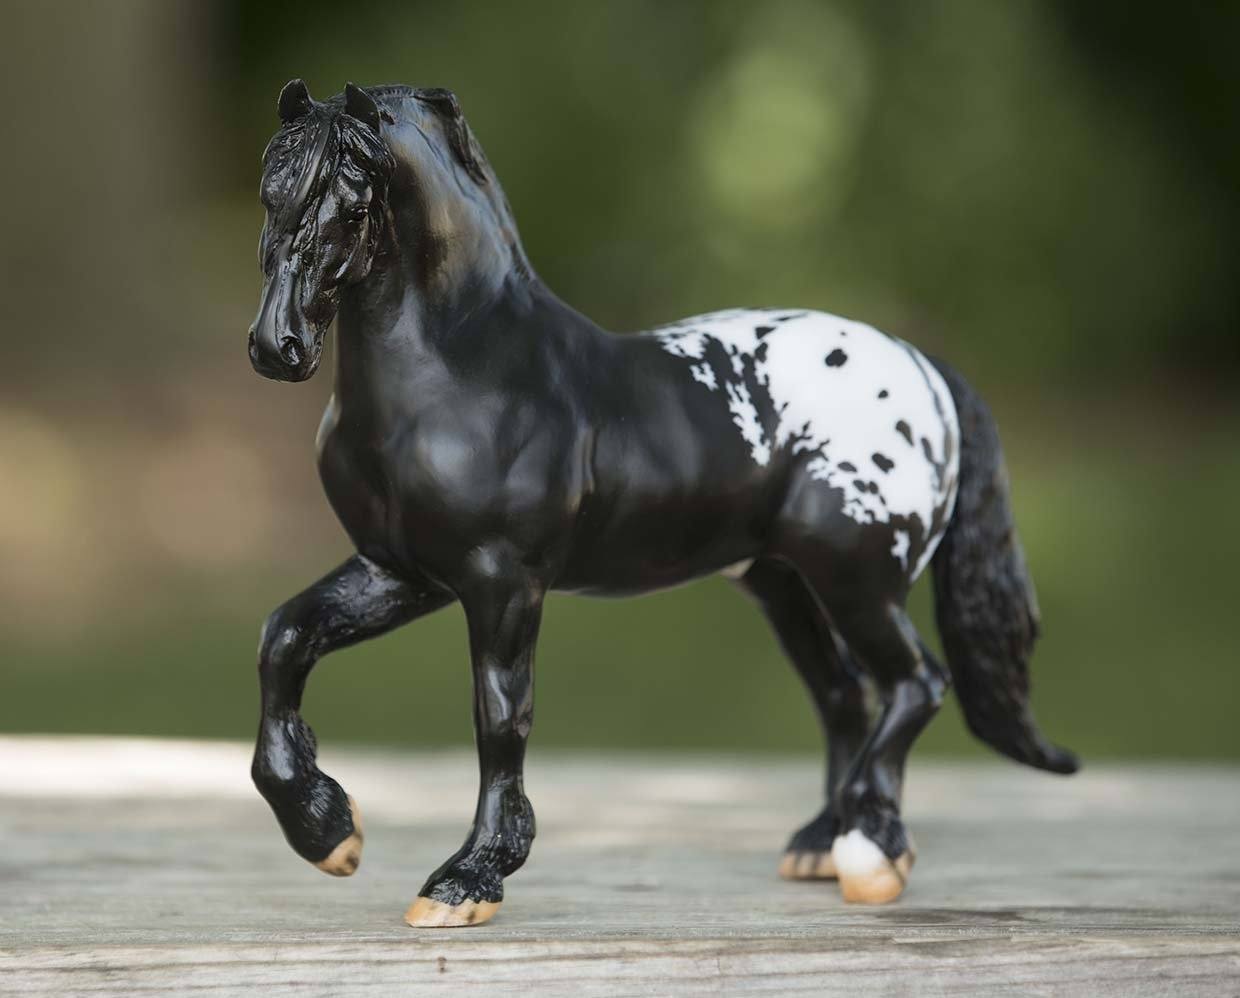 Breyer #1805 Harley Famous Racehorse Pony Black Blanket Appaloosa Friesian App American Sugarbush Harlequin Draft Horse